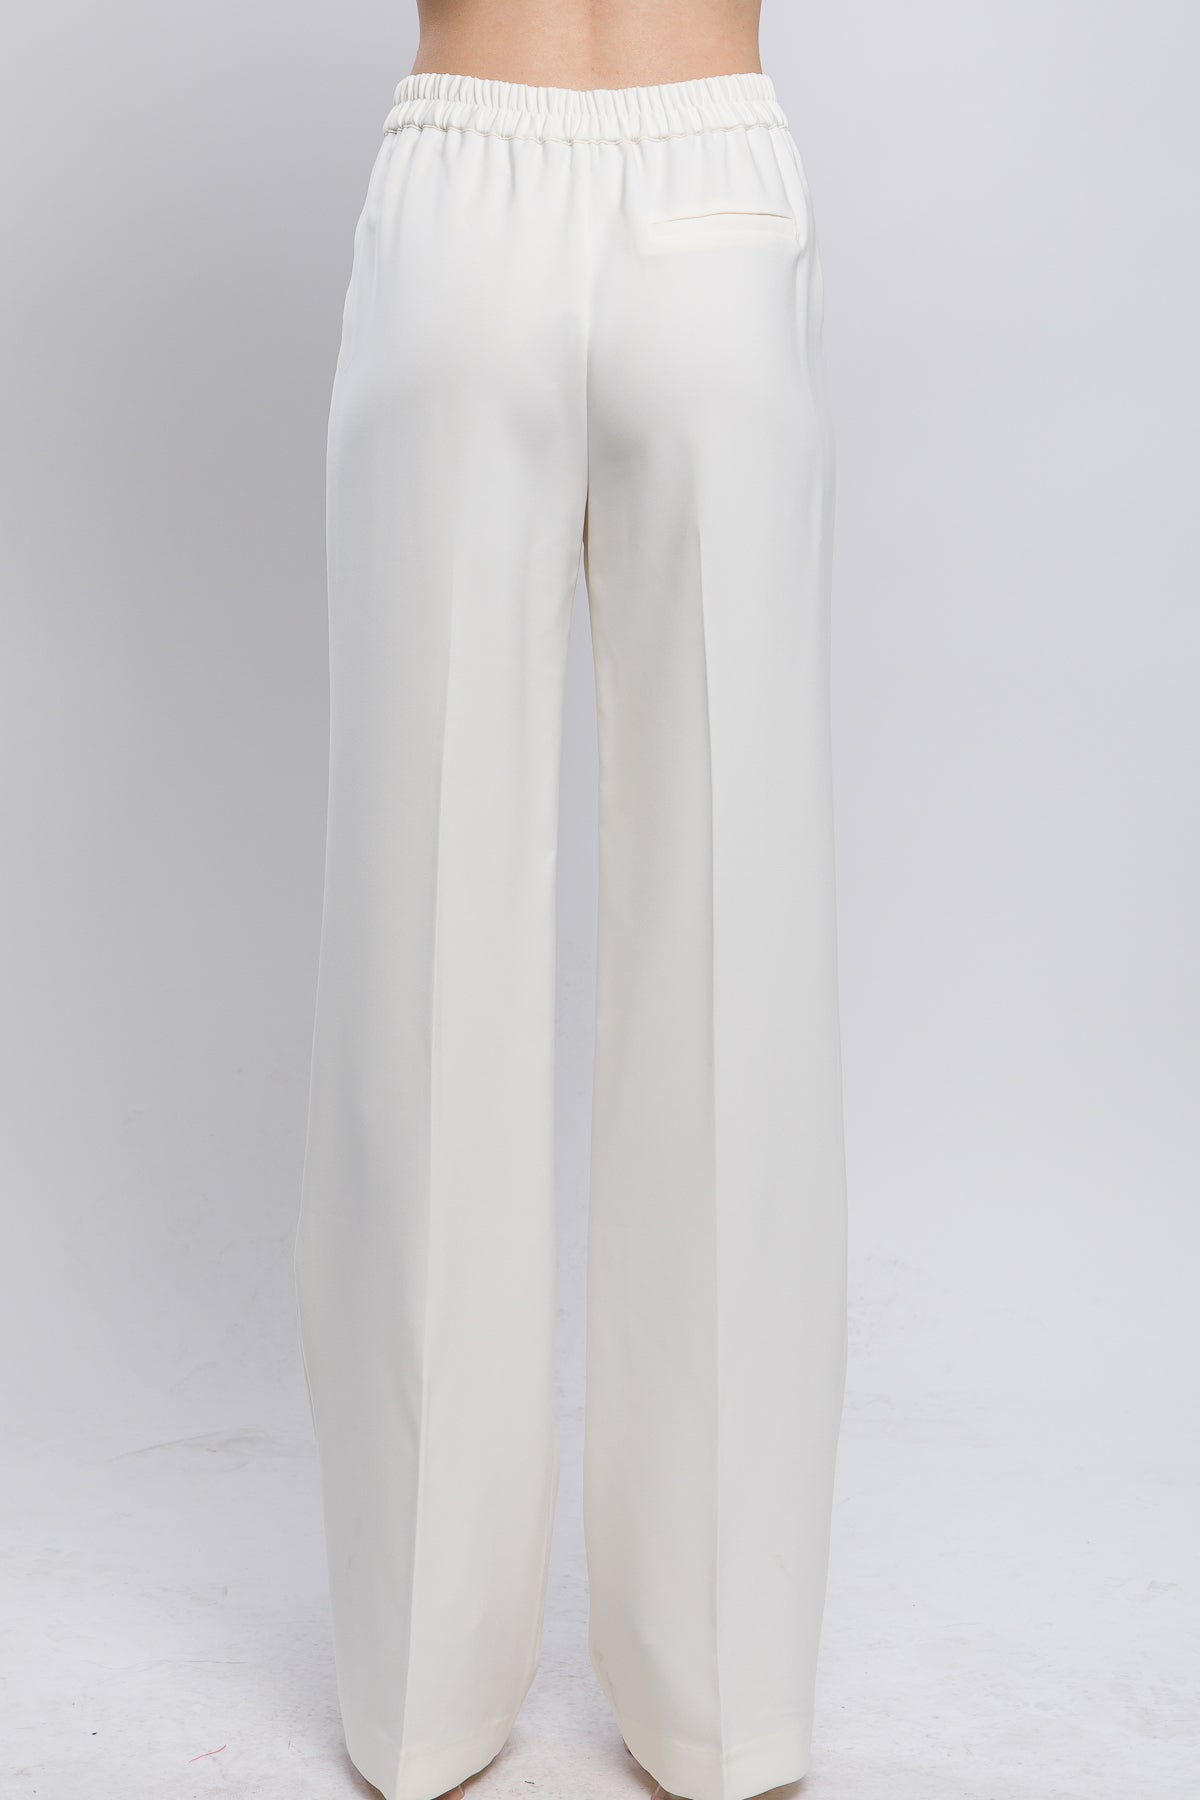 REGULAR-FIT DRESS PANTS 2-2-2